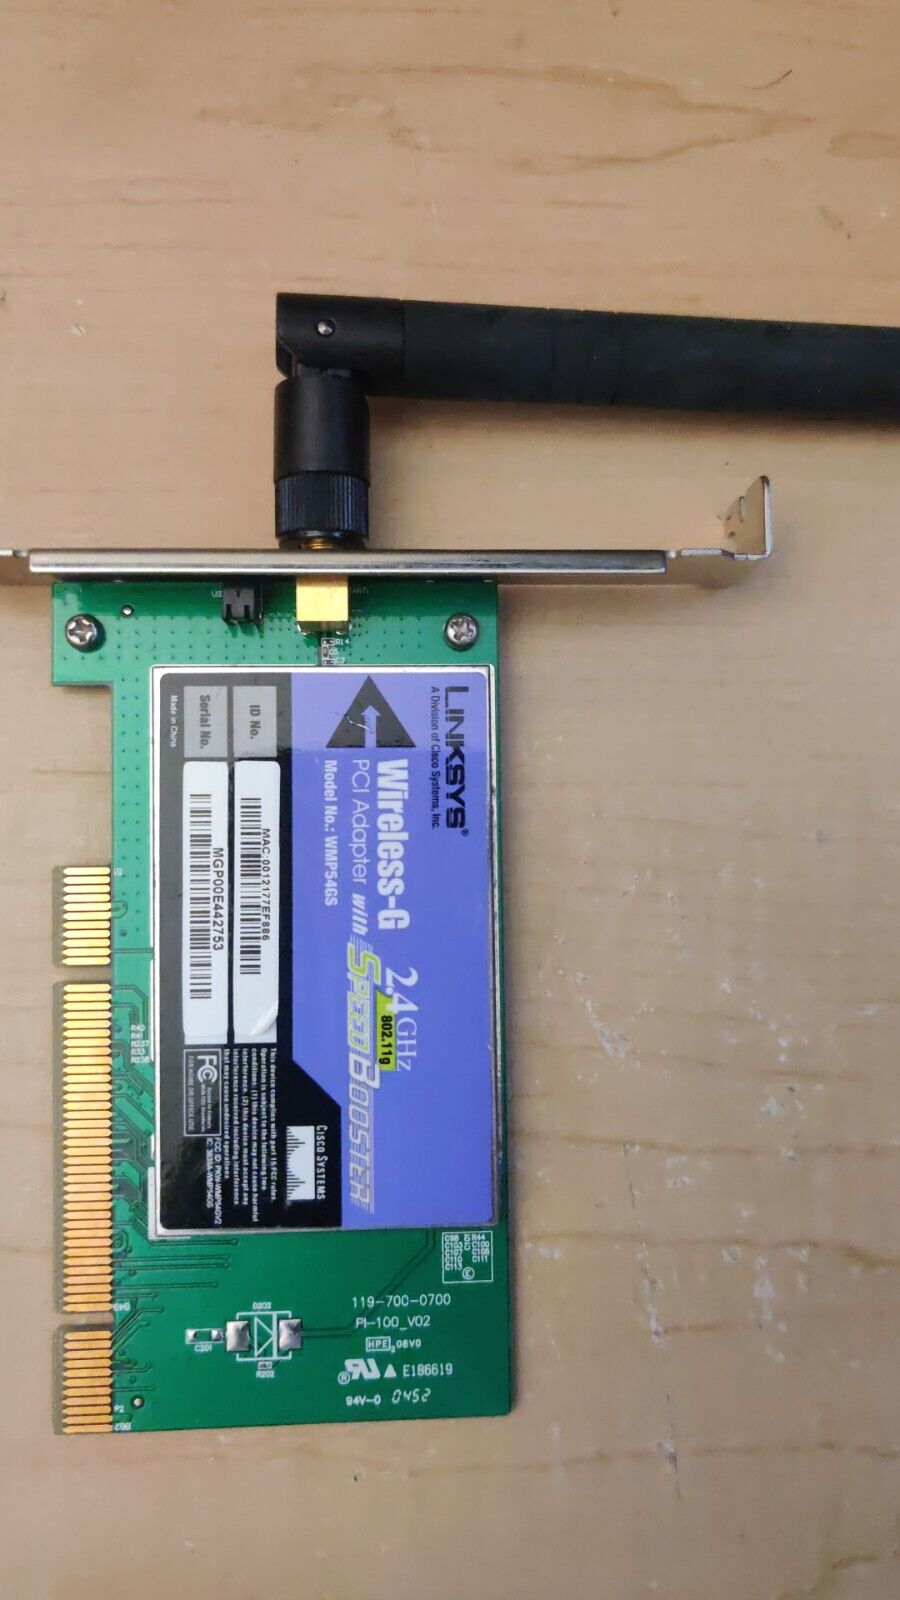 Linksys WMP54GS Cisco PCI Wireless G Card SpeedBooster with Antenna